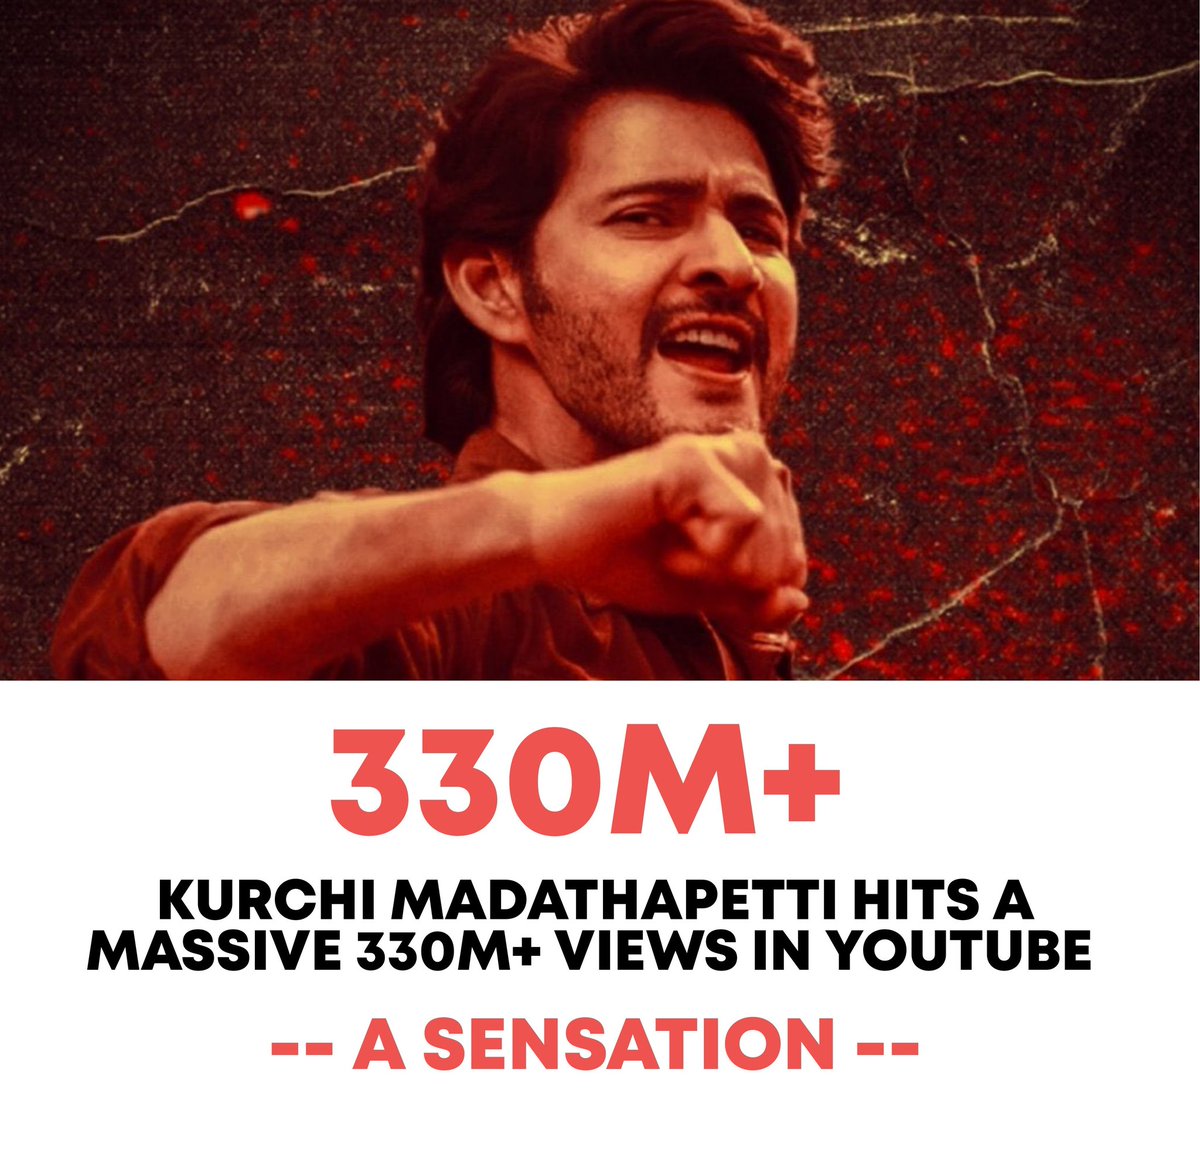 Massive 330M+ views for kurchi madathapetti song in YouTube 🔥 @urstrulyMahesh